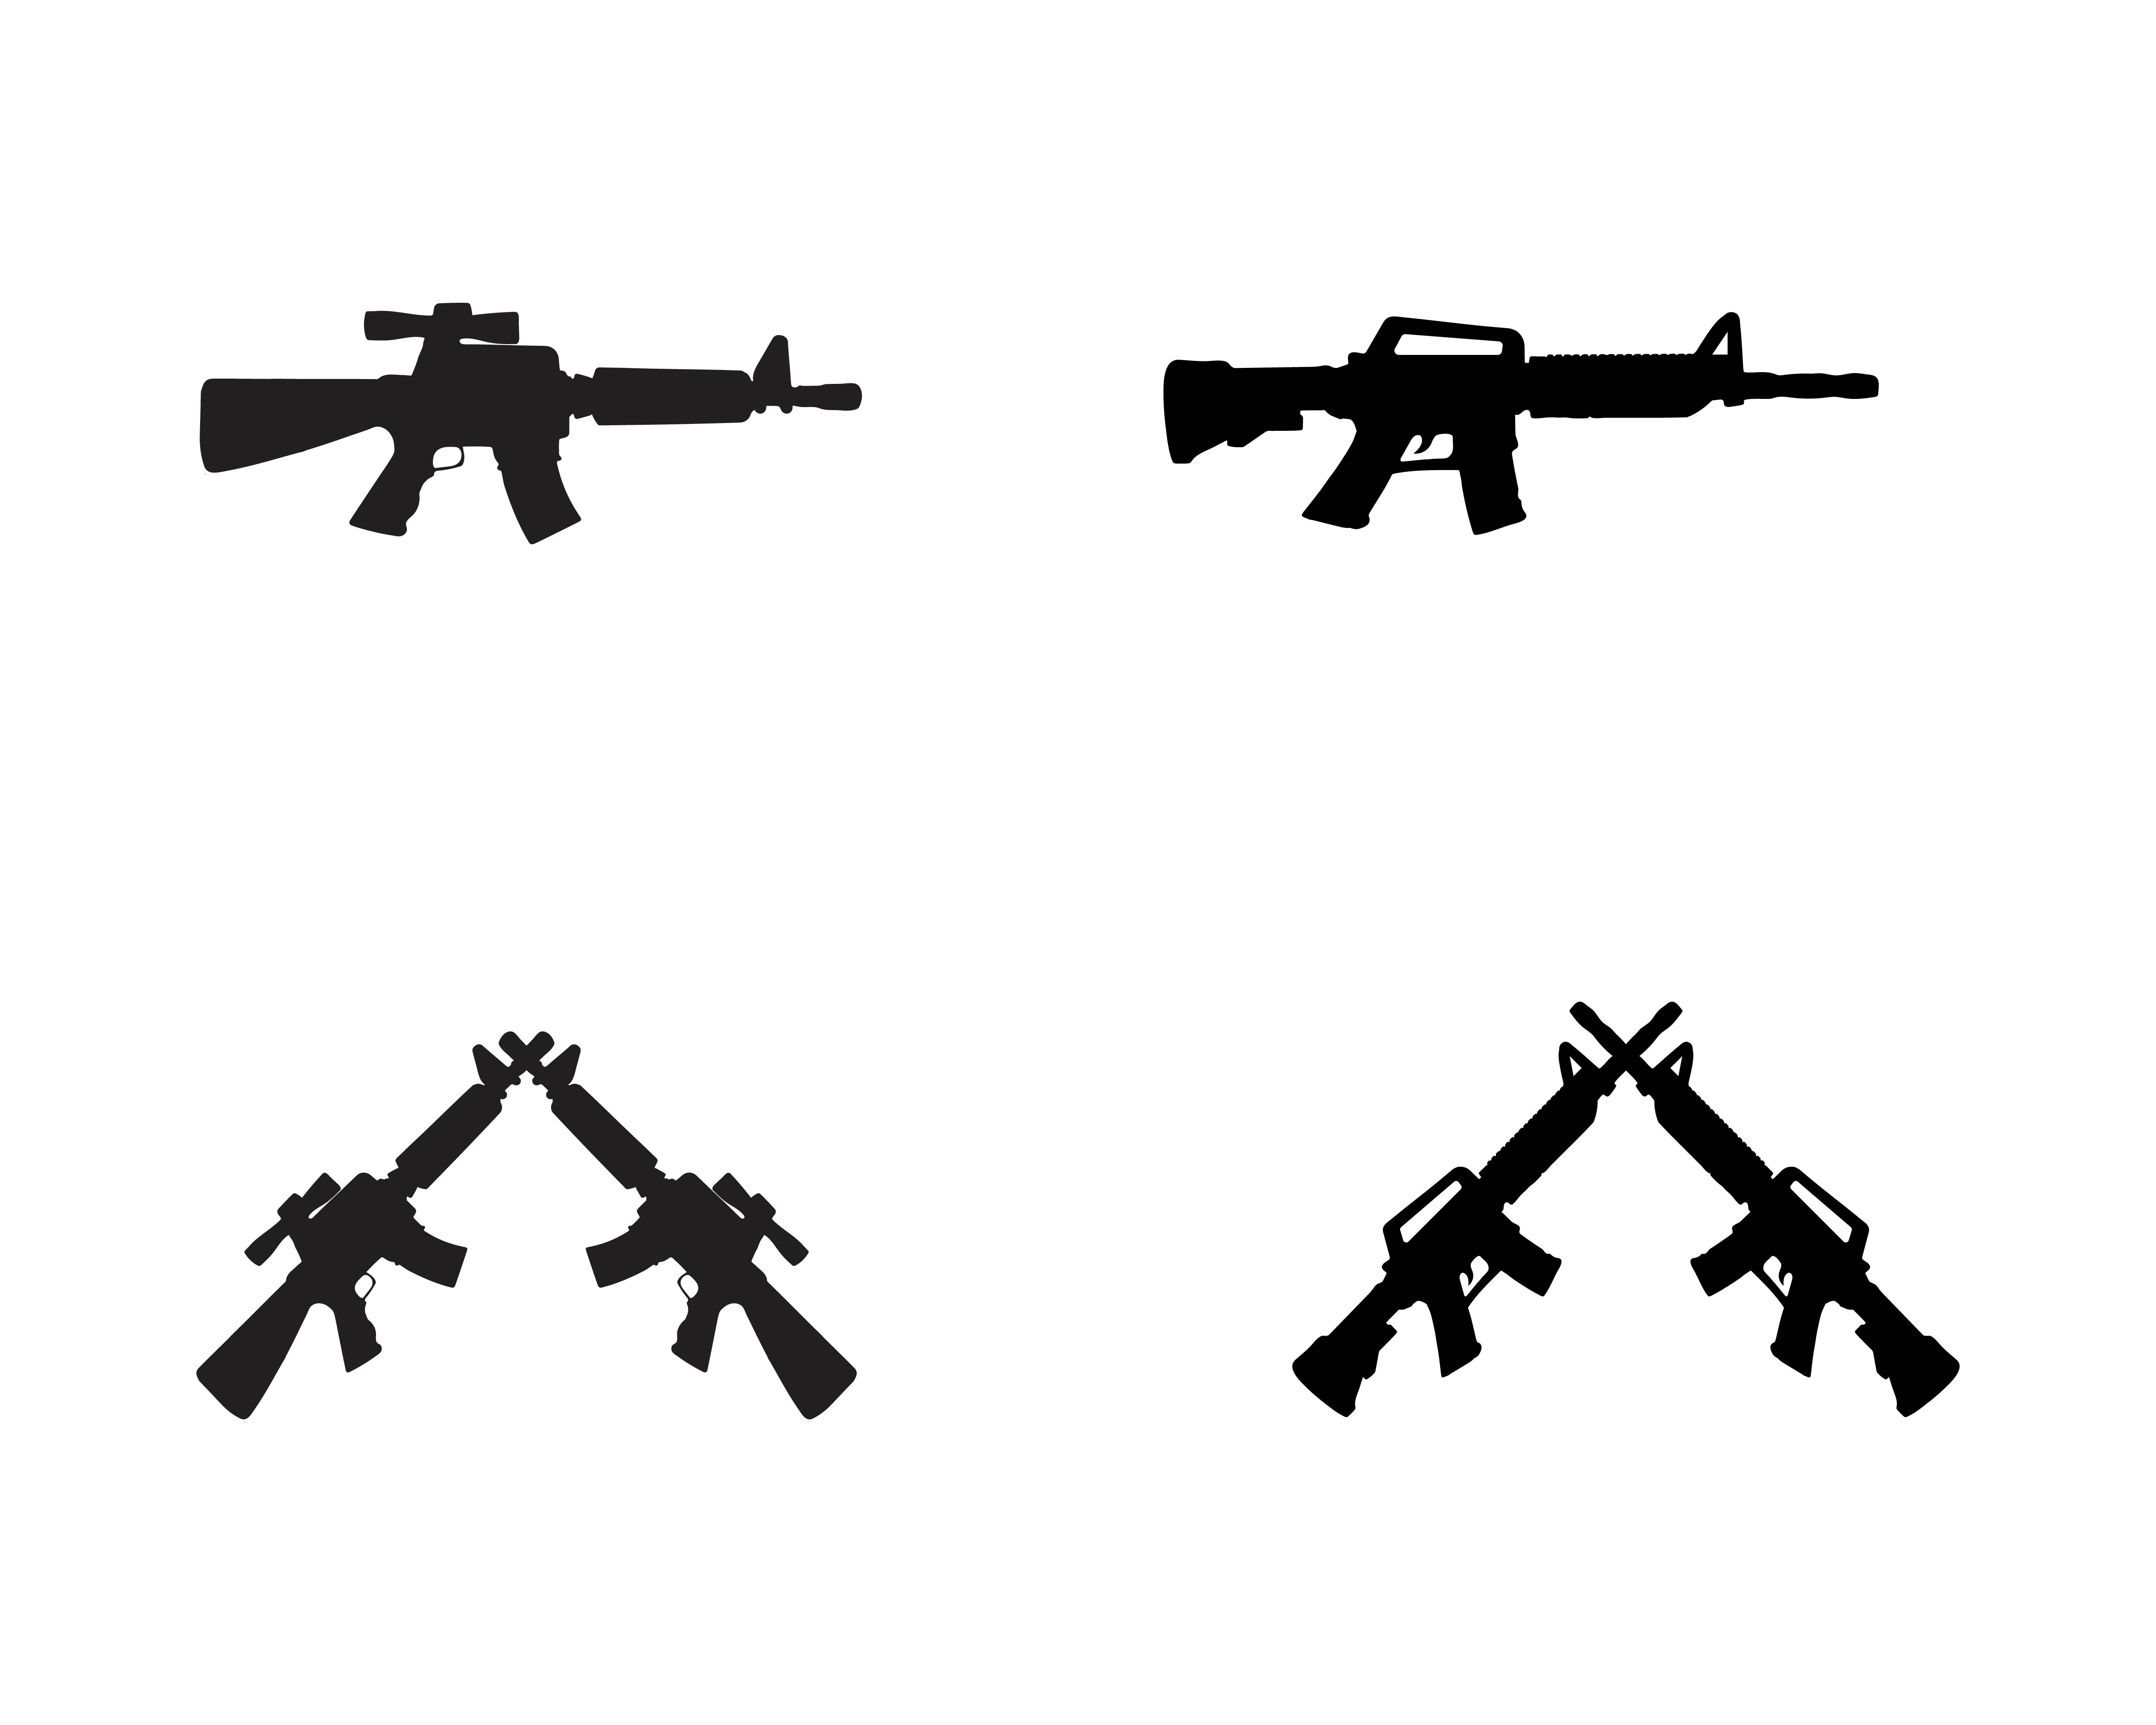 Download Gun silhouette vector black color - Download Free Vectors, Clipart Graphics & Vector Art